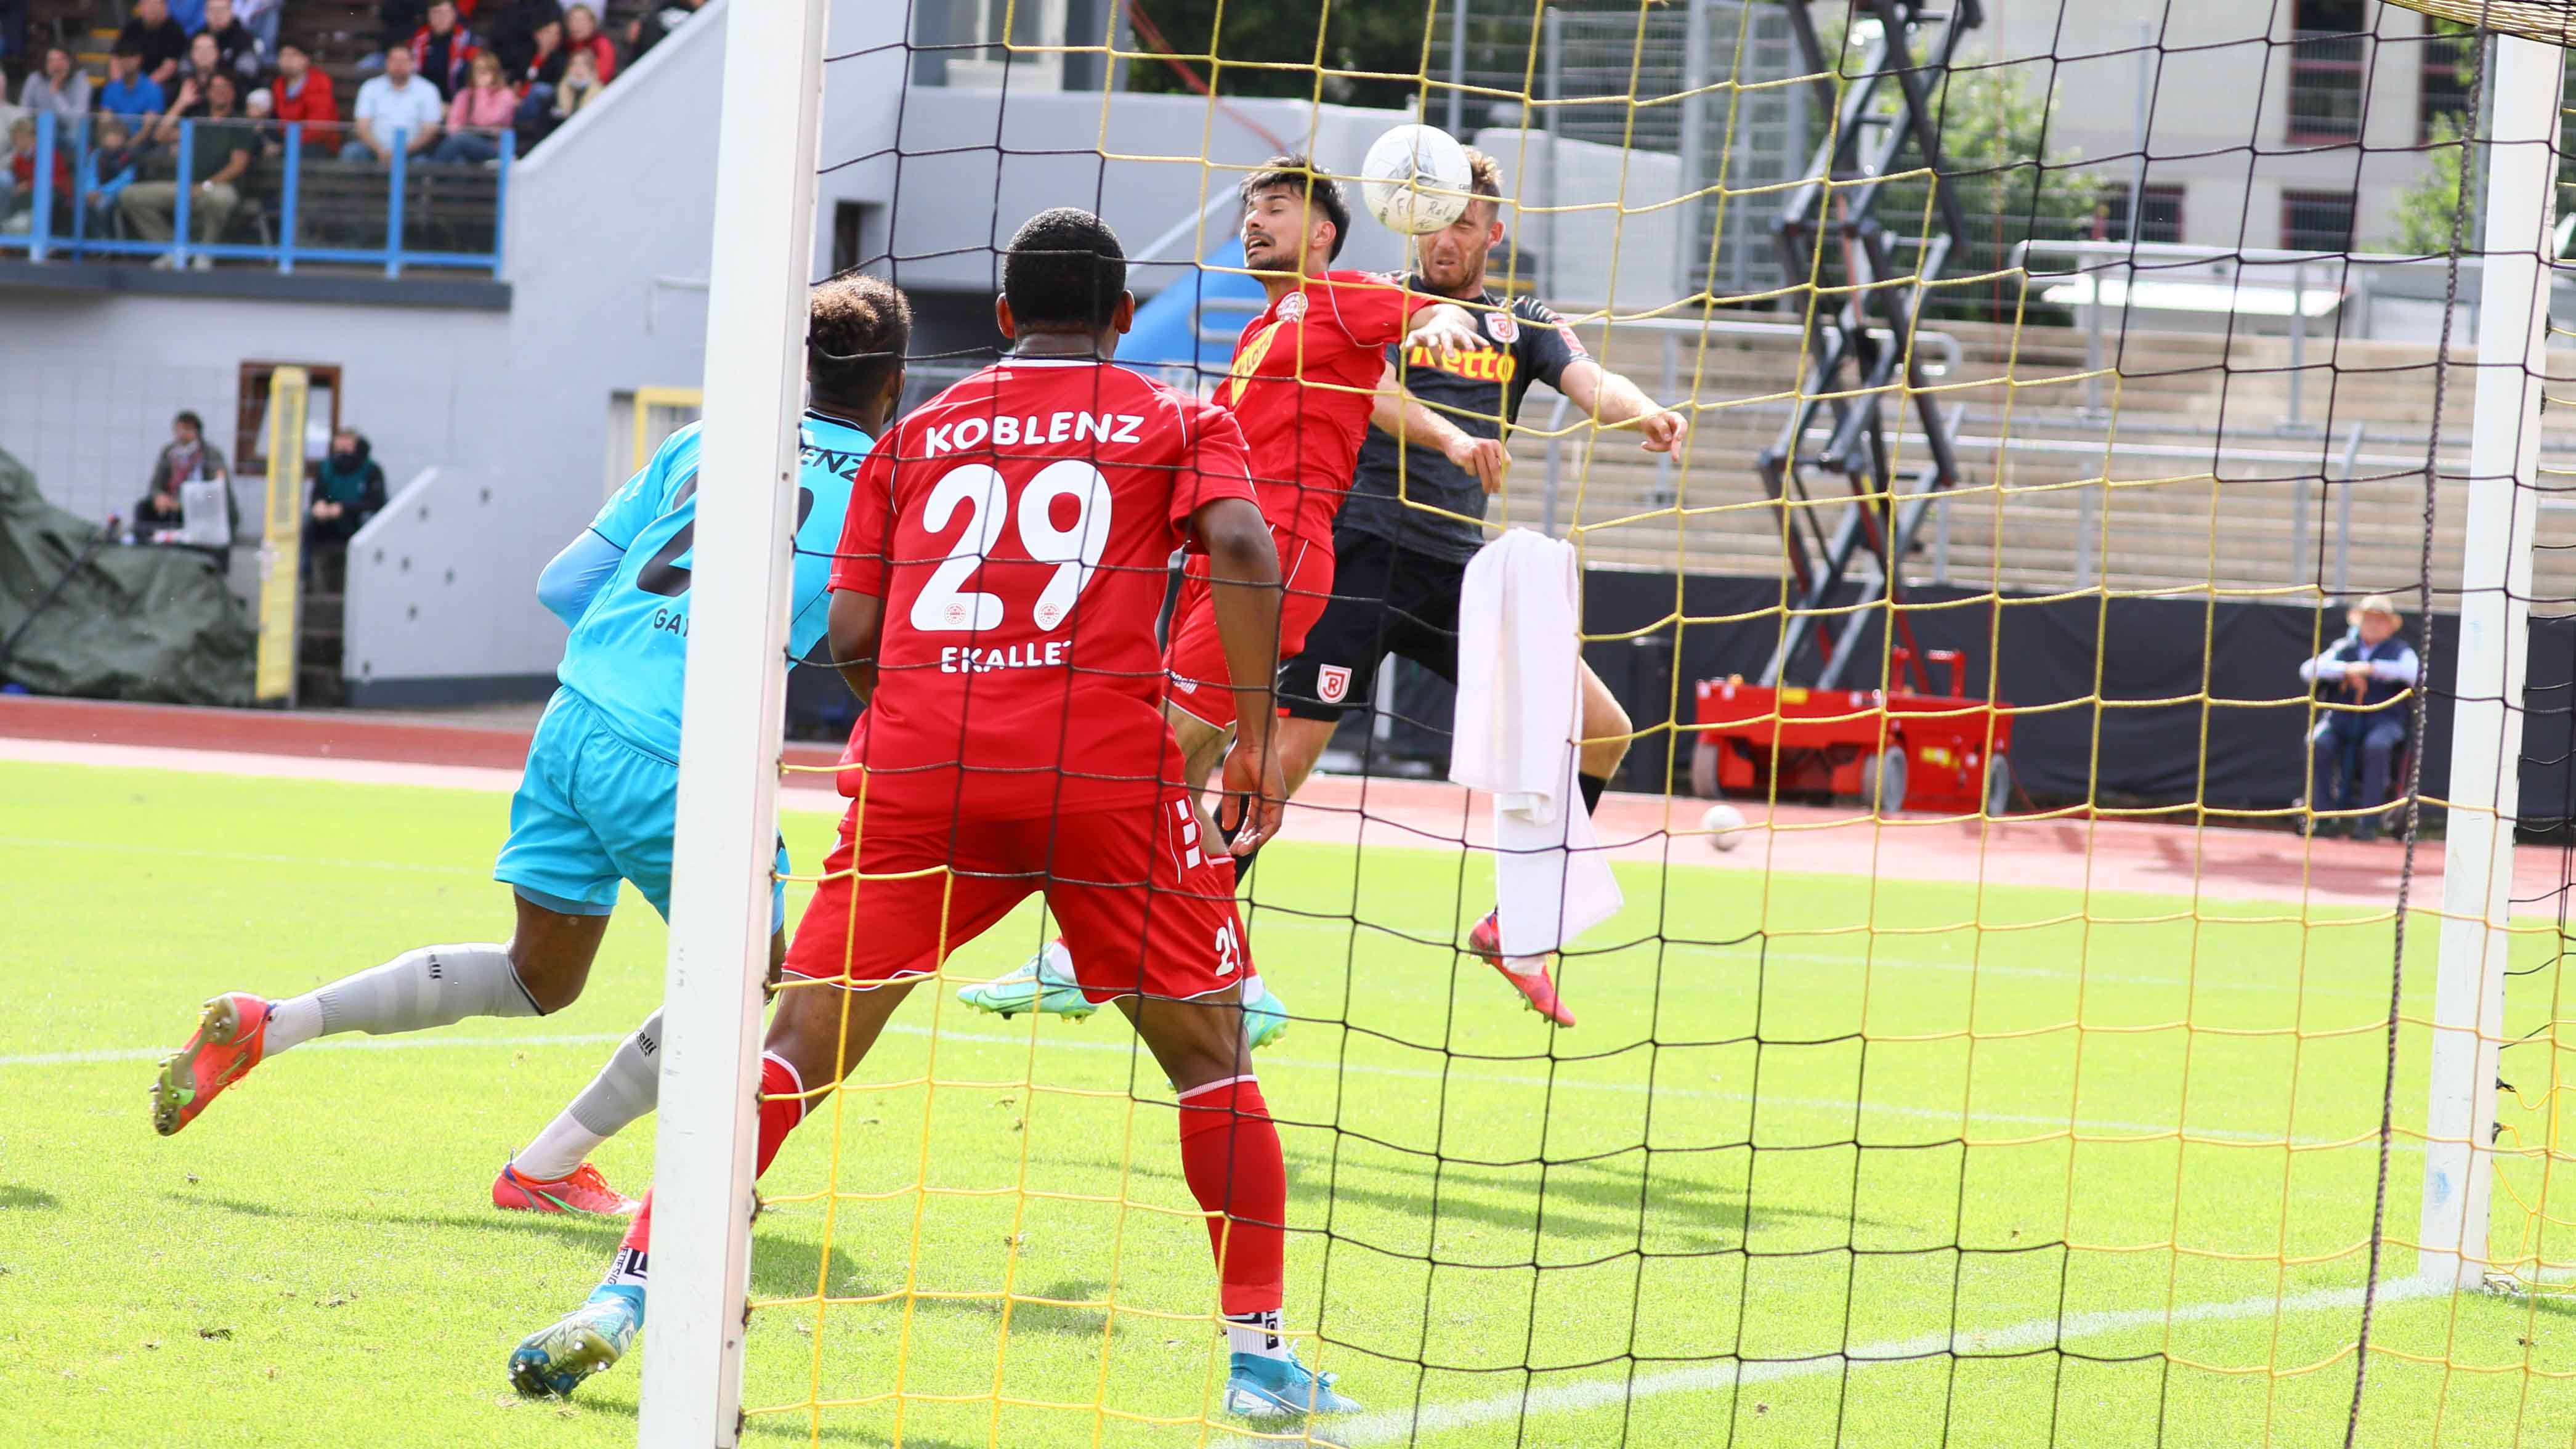 Andreas Albers vom SSV Jahn köpft den Ball zum 0:2 gegen den RW Koblenz.